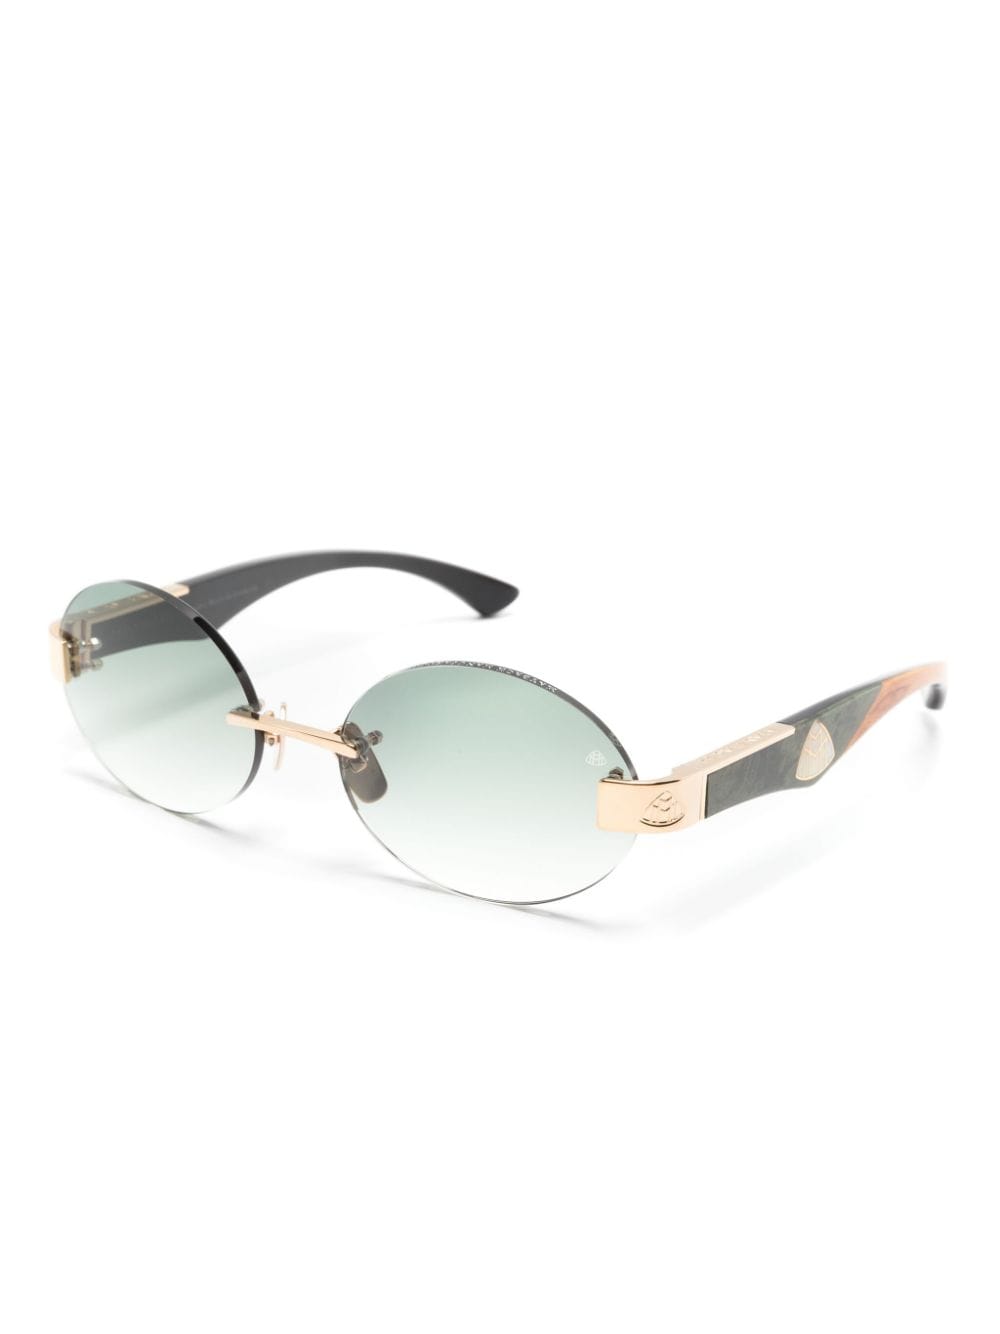 Maybach eyewear The Magic II zonnebril met ovalen montuur - Groen